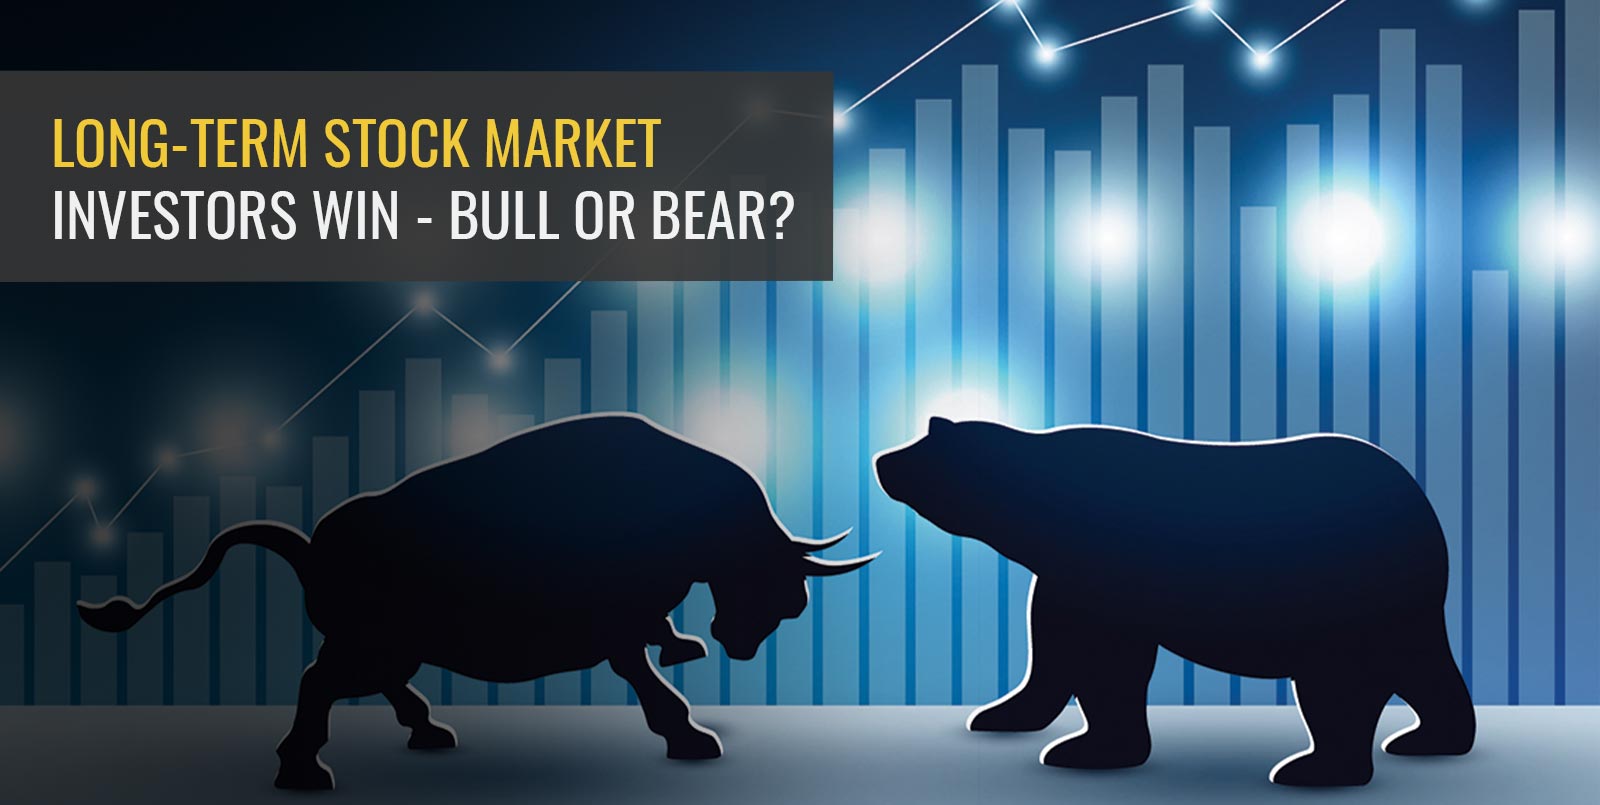 Free Stock Photo of Bull versus Bear - Financial Markets Concept | Stock  market, Stock market for beginners, Financial markets